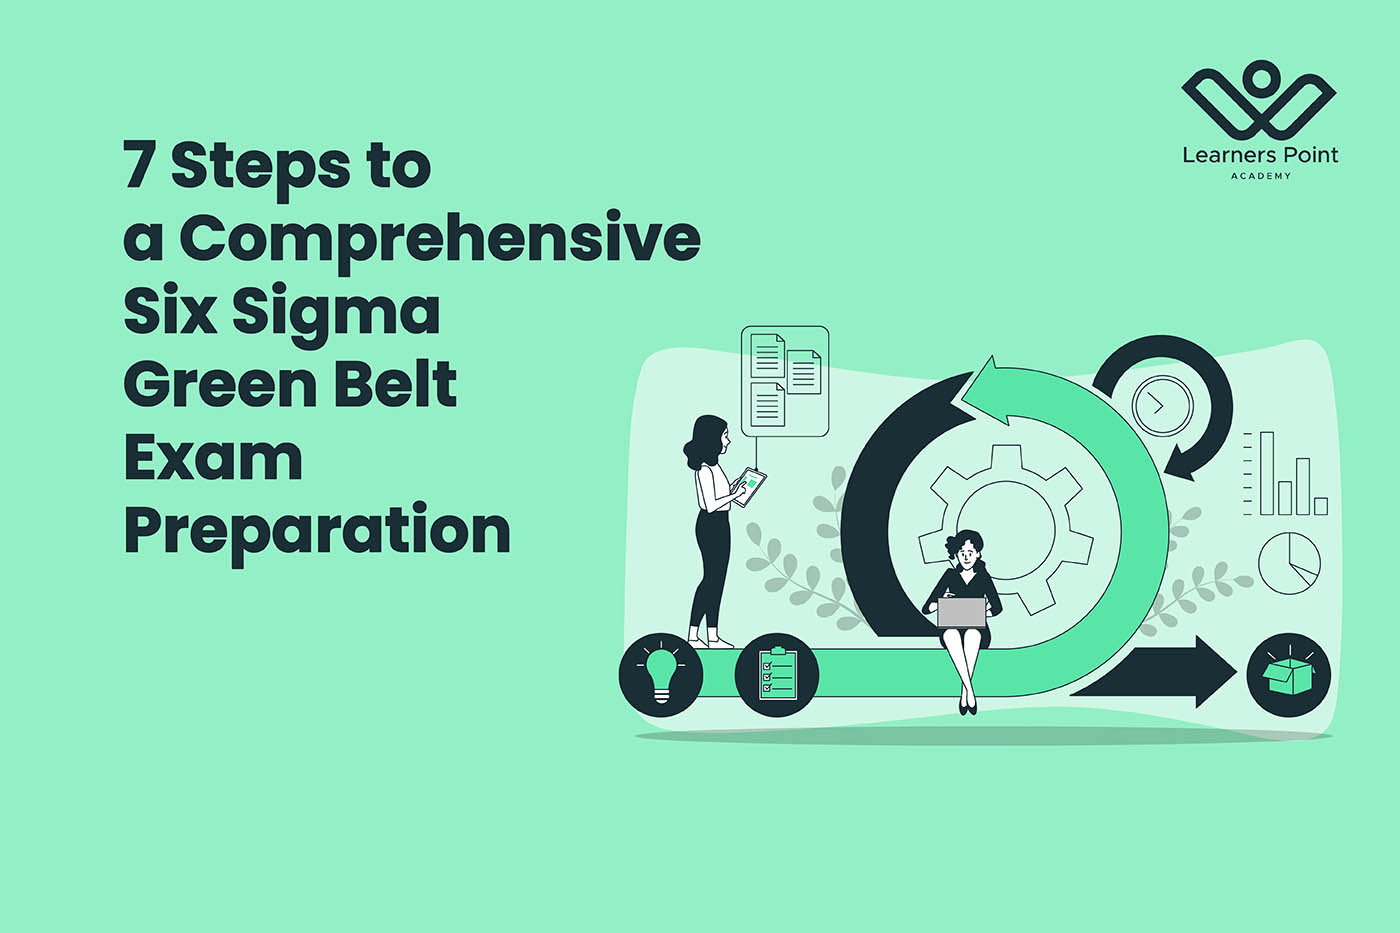 7 Steps to a Comprehensive Six Sigma Green Belt Exam Preparation